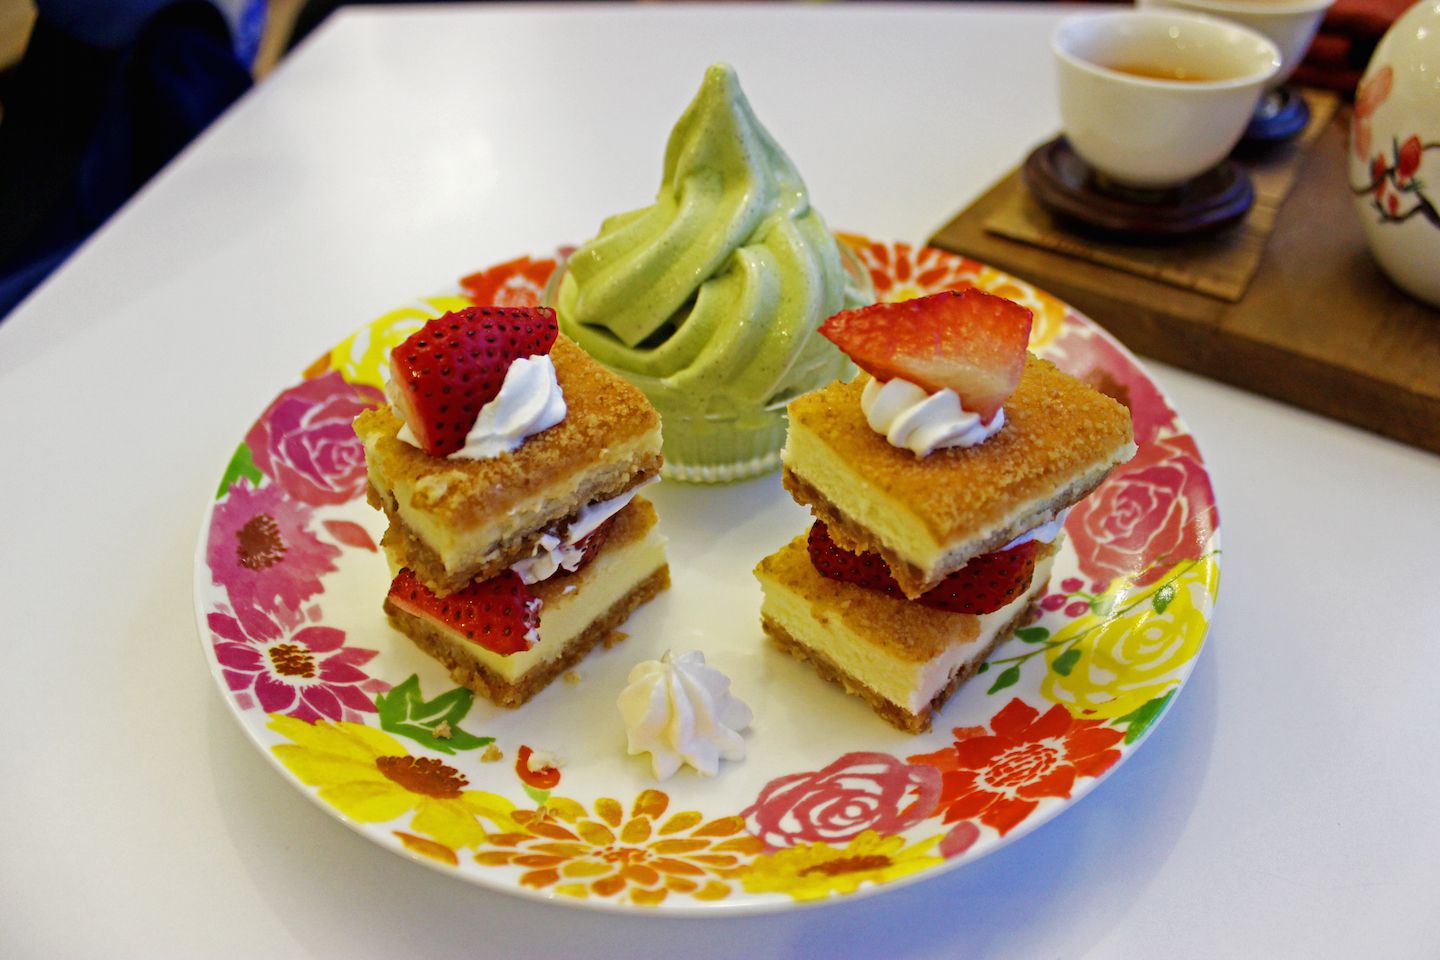 Strawberry cheese cake and green tea ice cream at Maokong Tea House